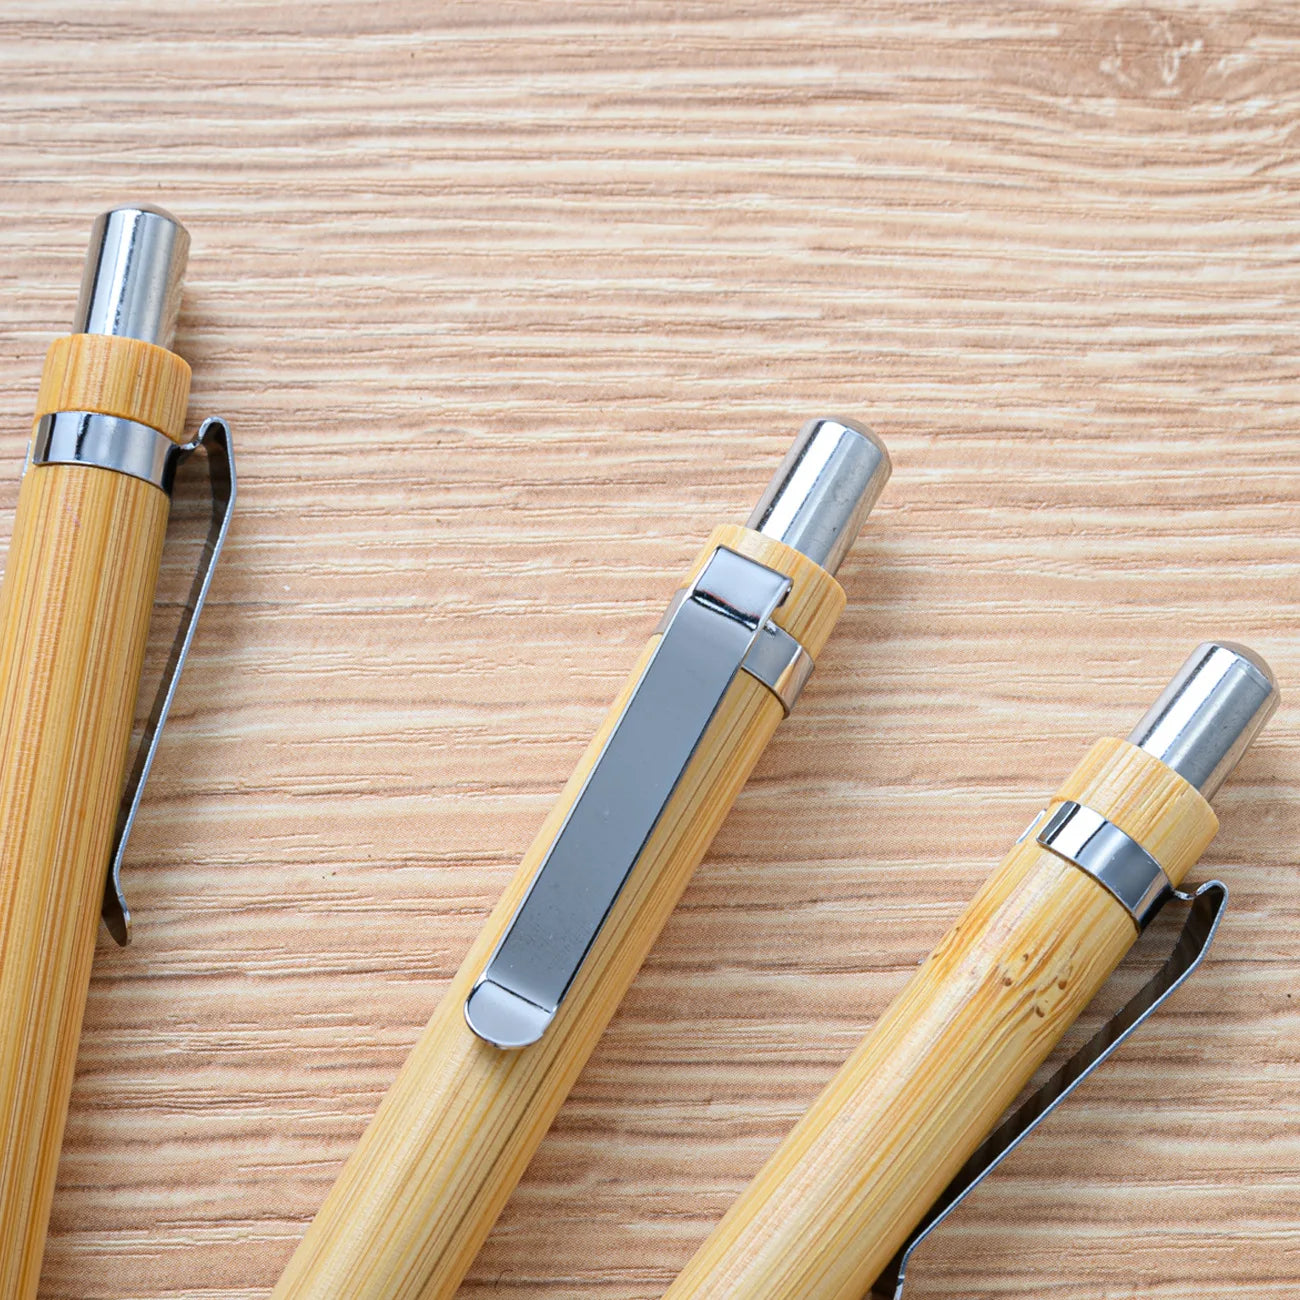 Bamboo Pen Ballpoint Pens